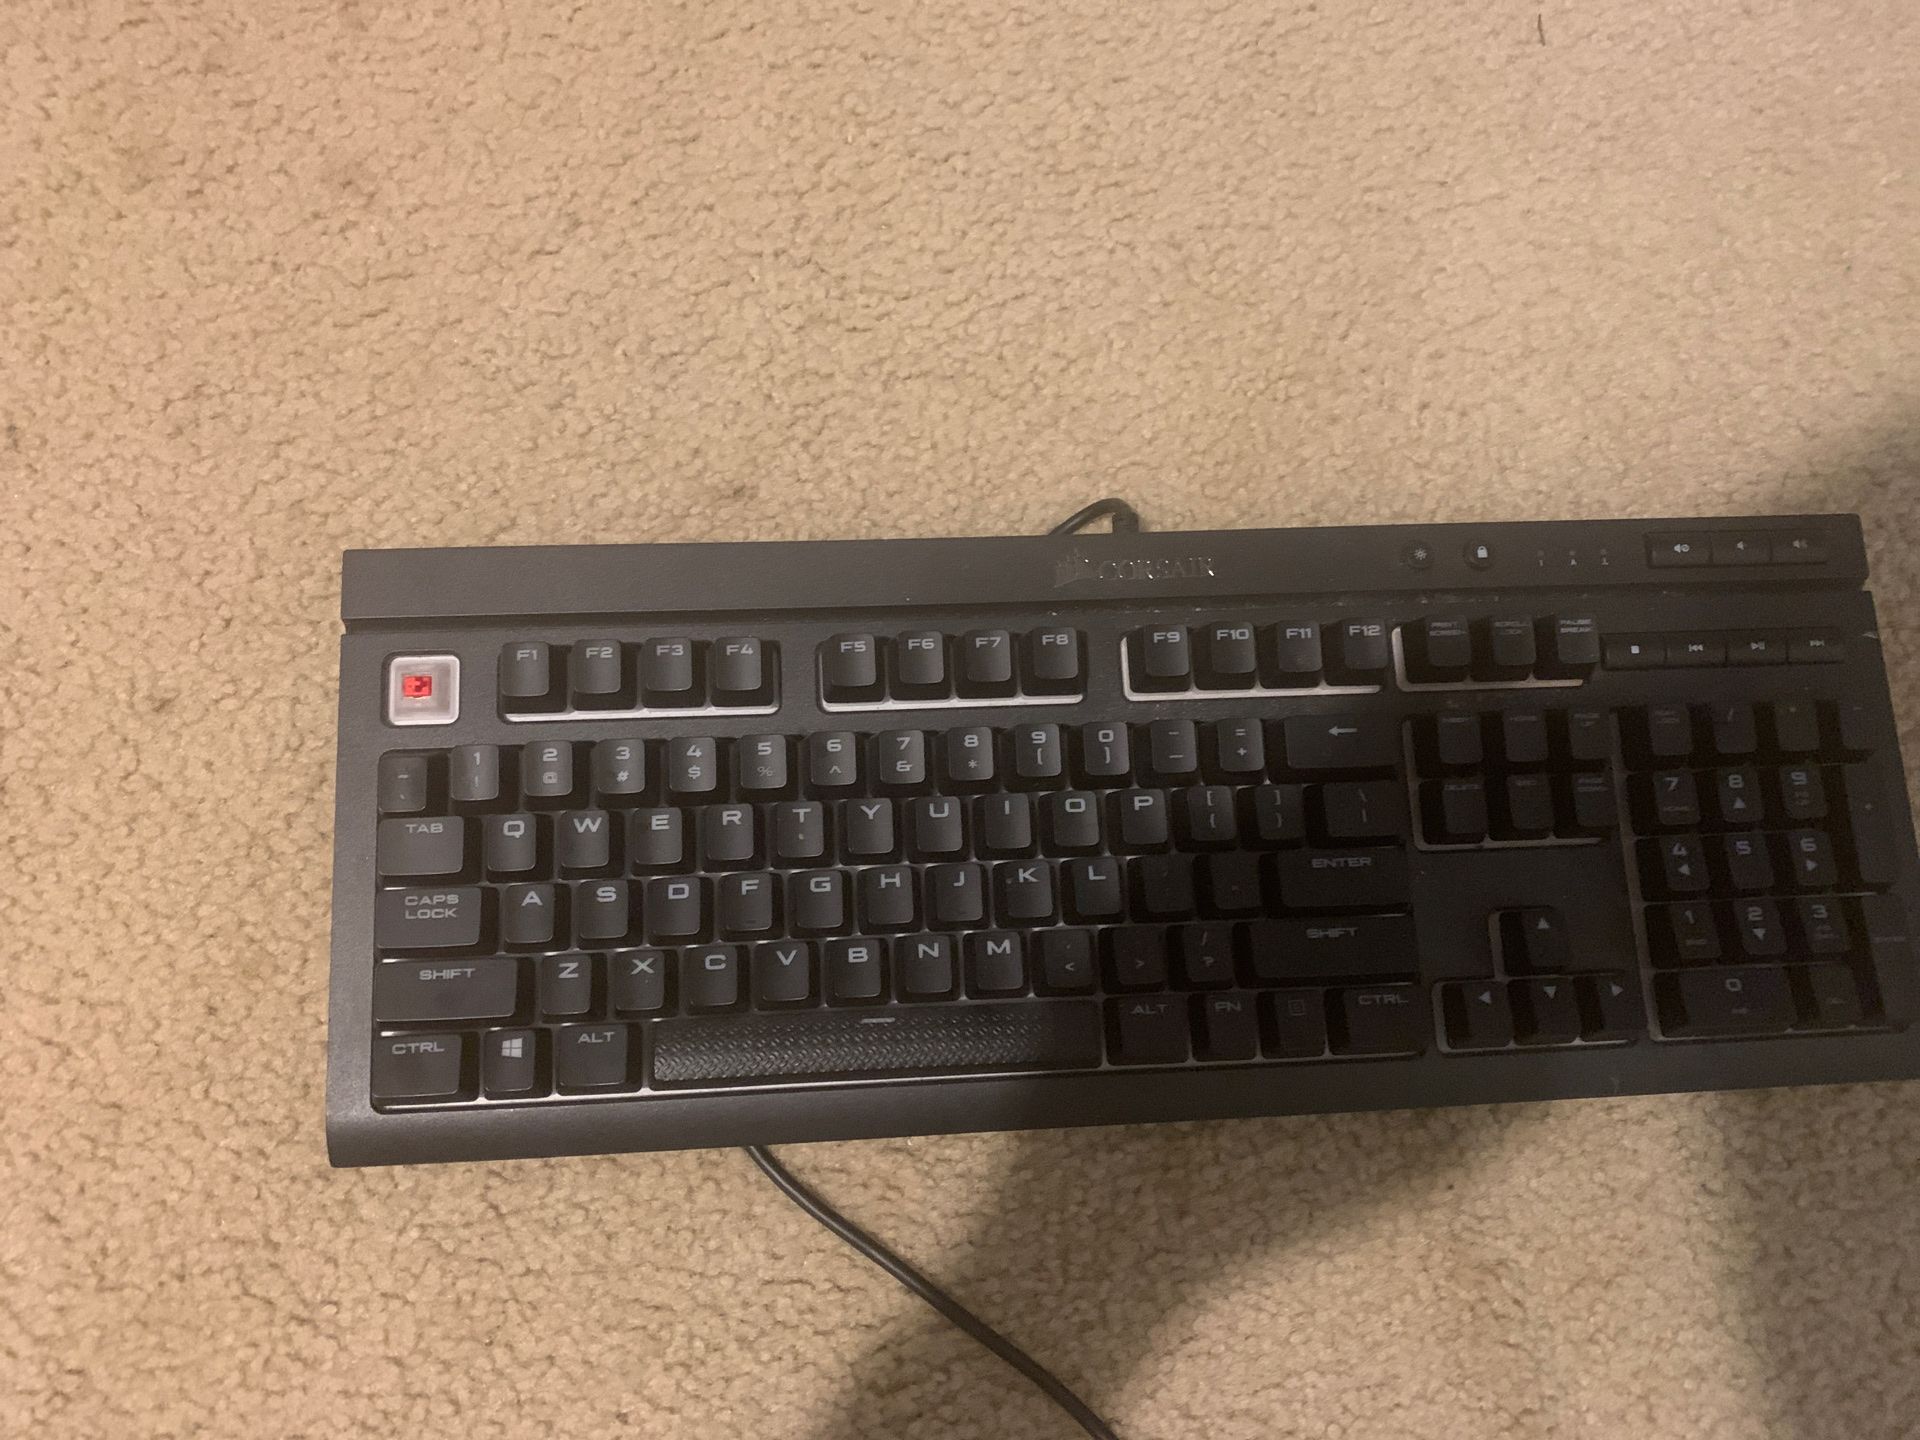 Corsair rgb keyboard